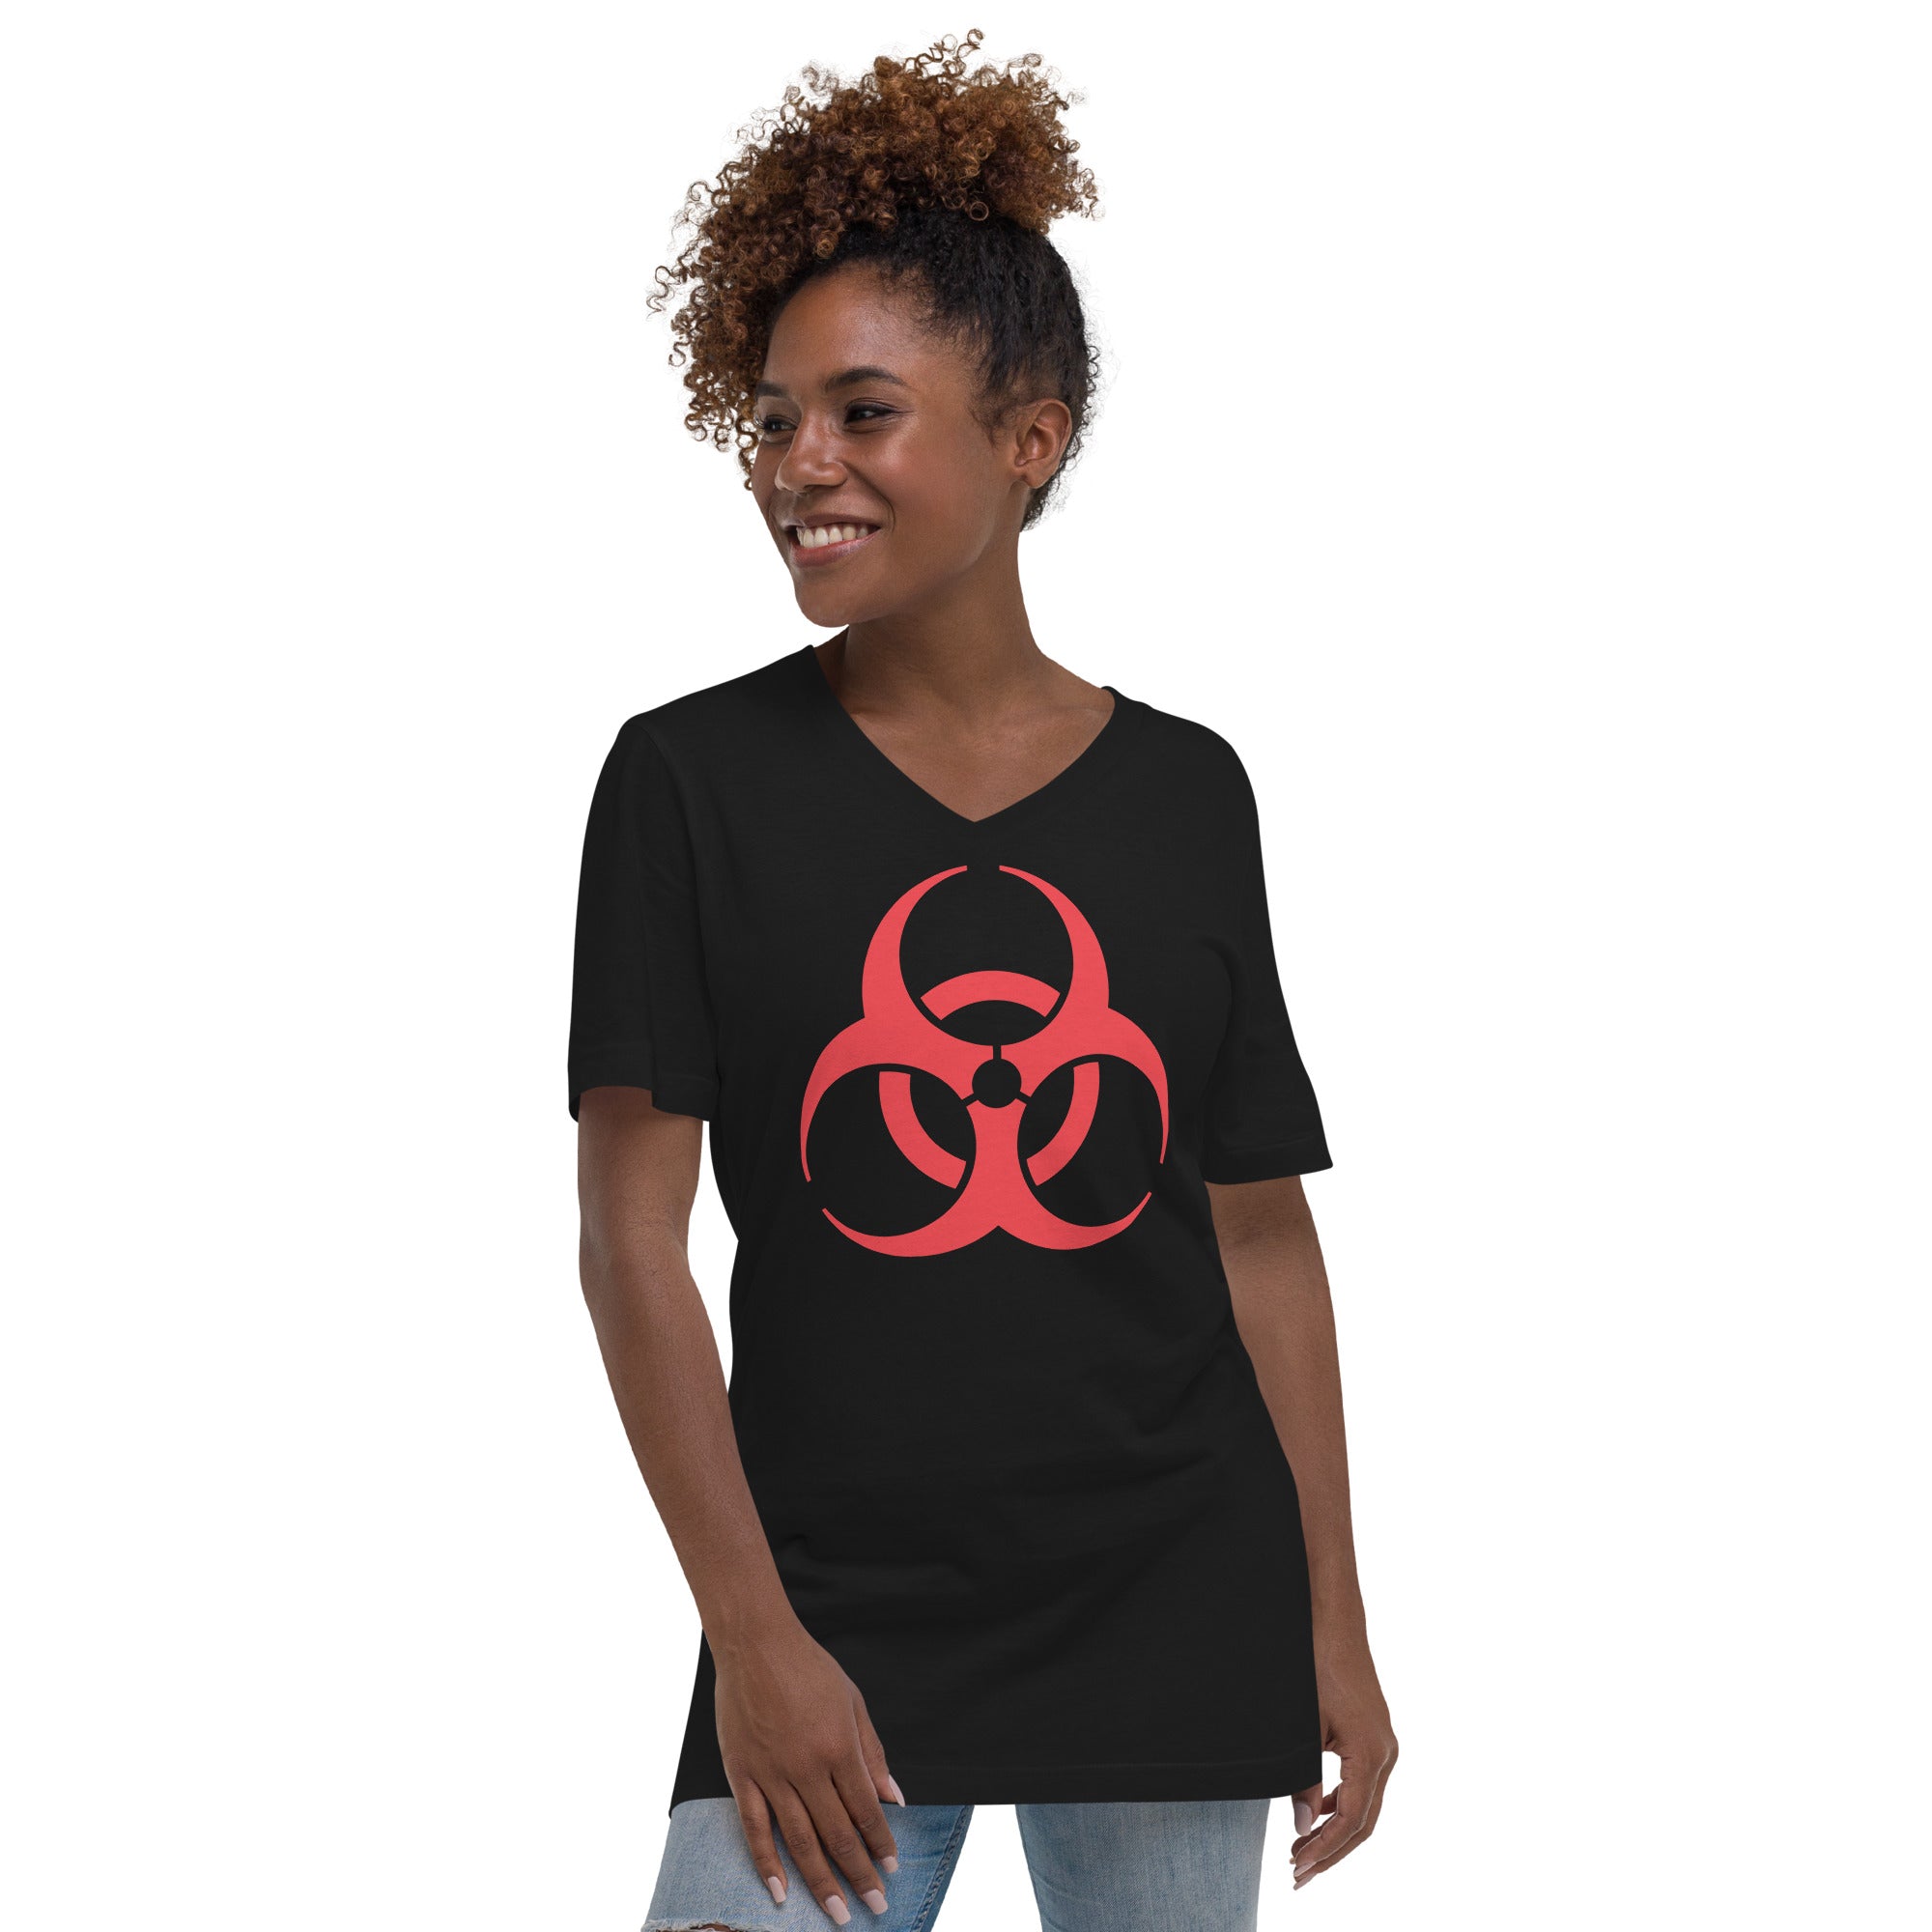 Red Biohazard Sign Toxic Chemical Symbol Women’s Short Sleeve V-Neck T-Shirt